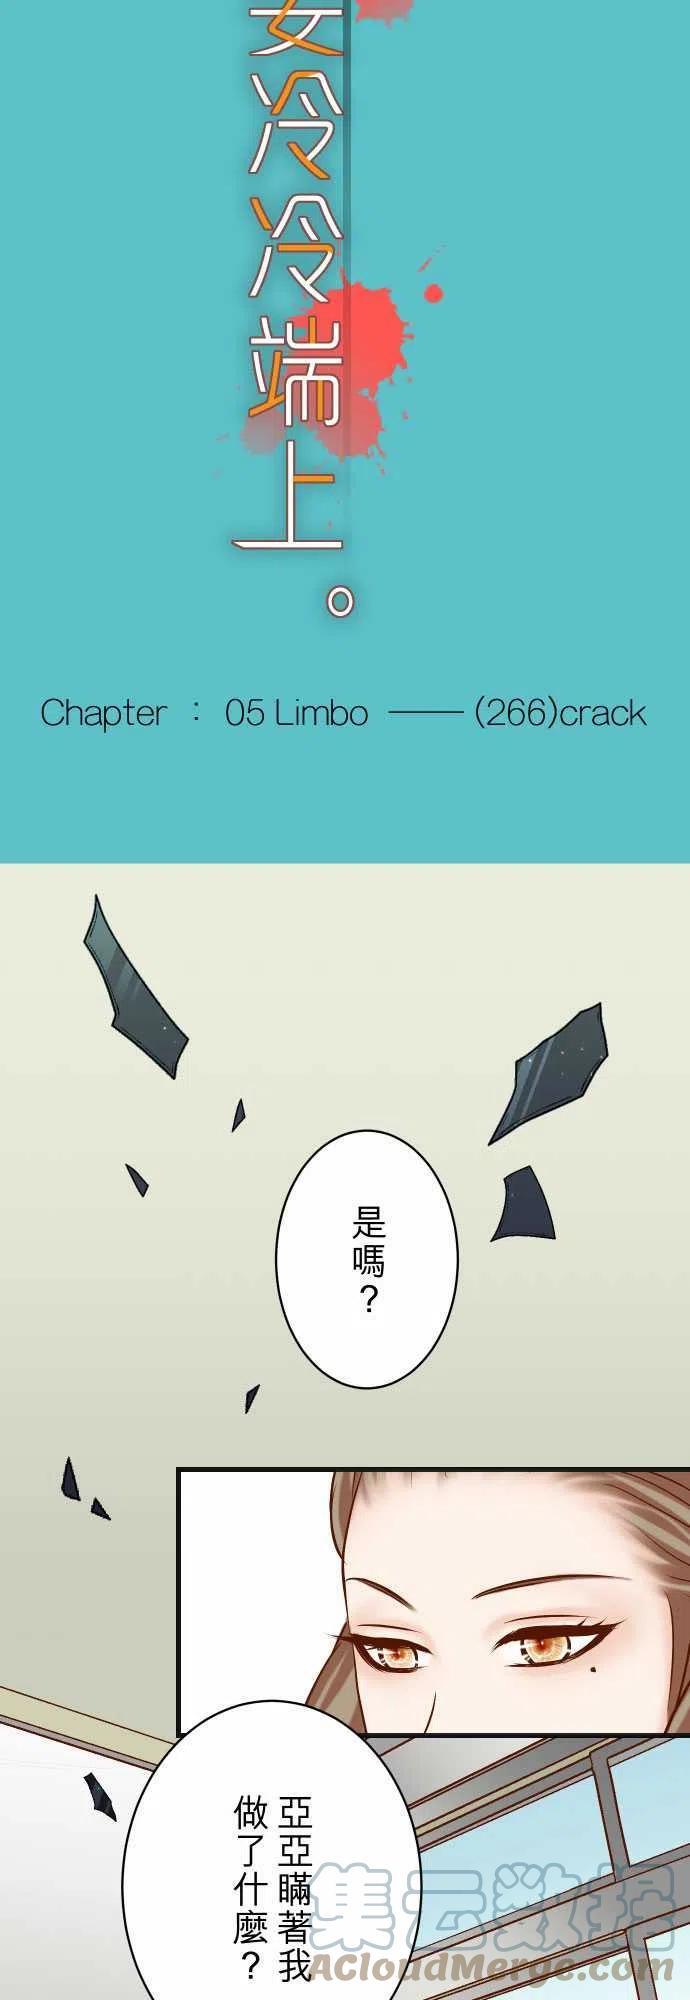 第五章 Limbo 266 Crack2